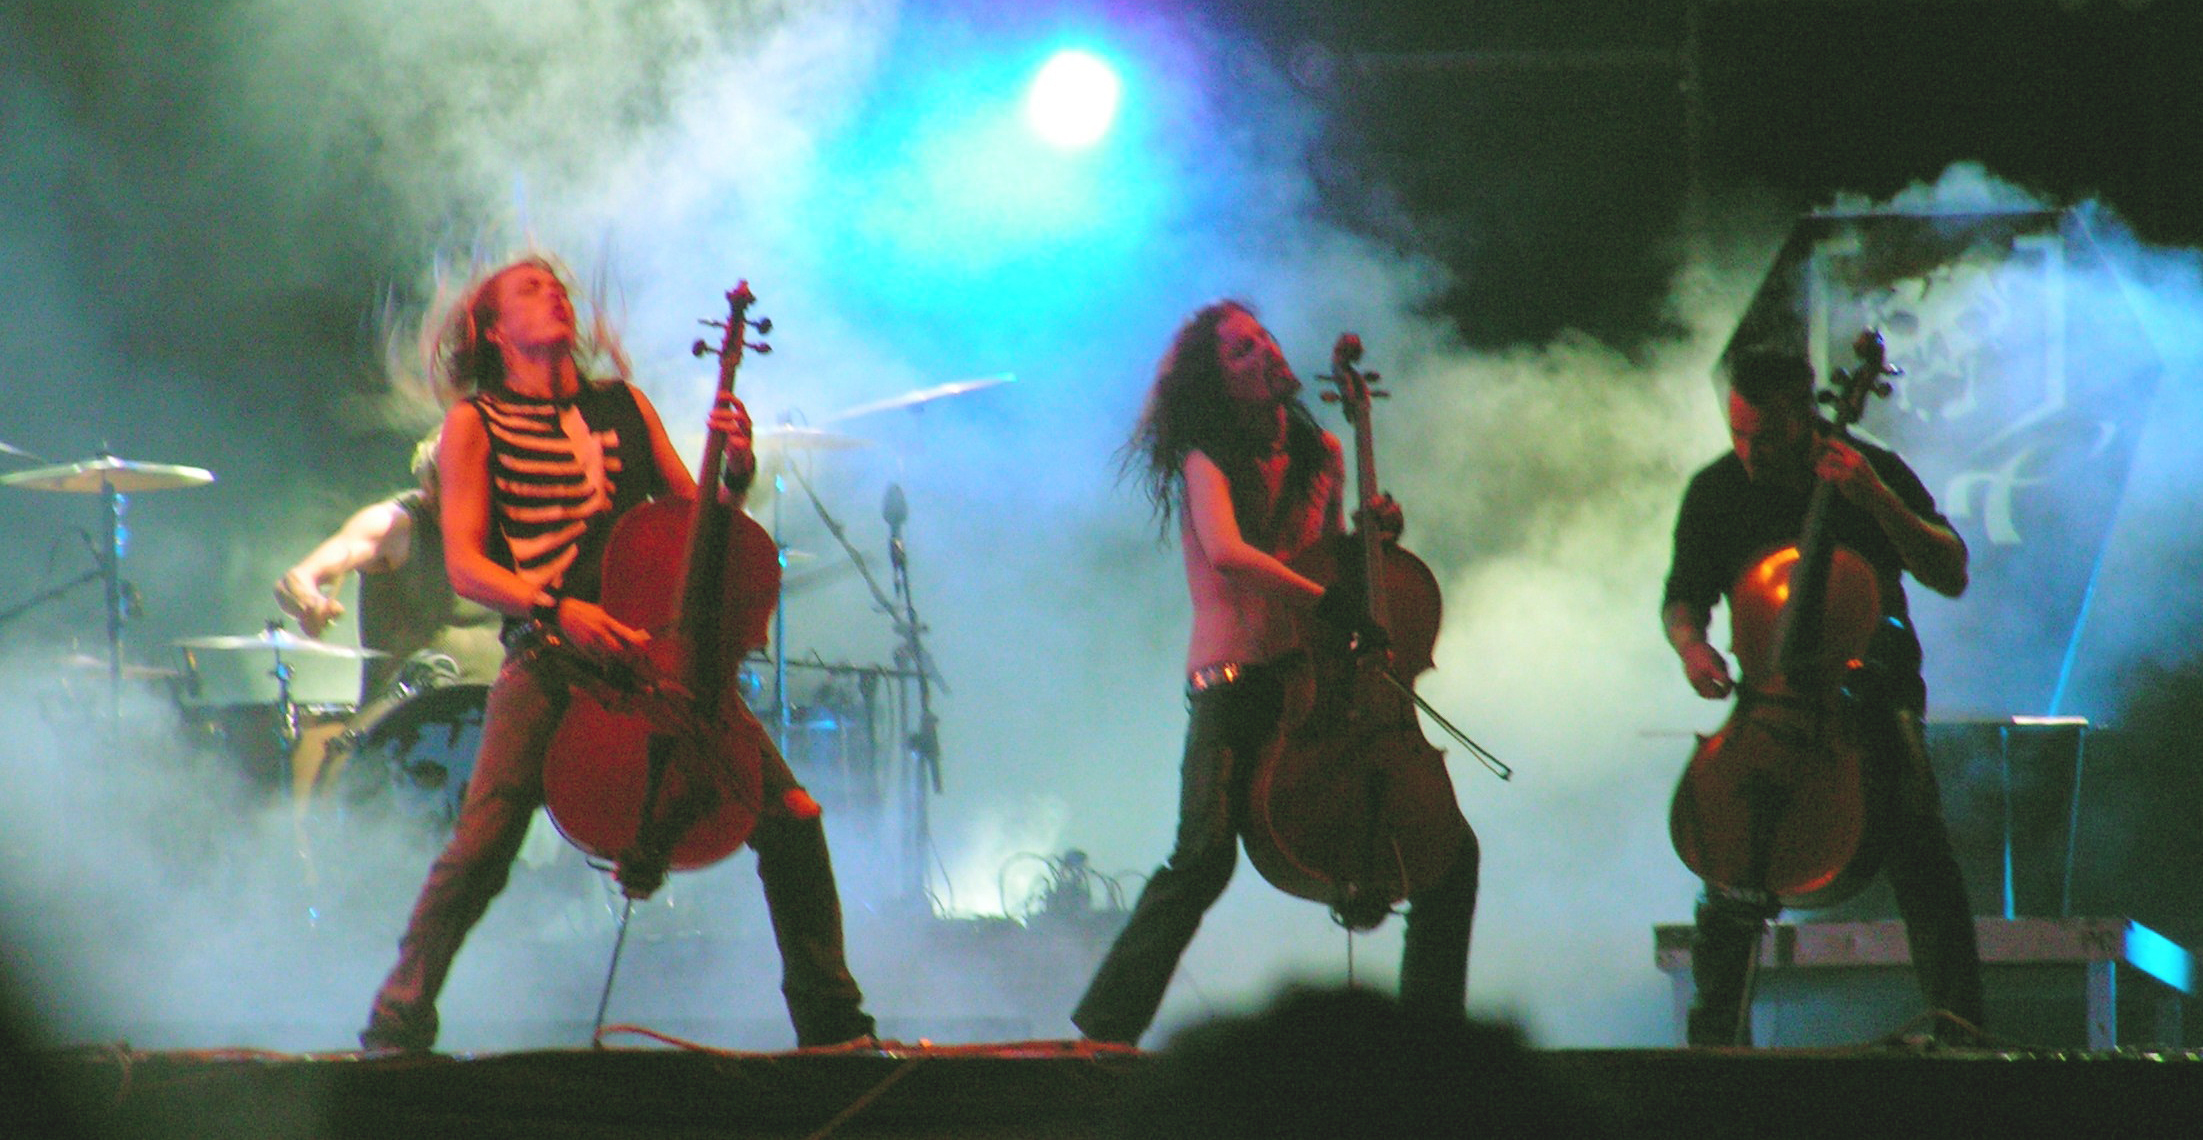 21 secolo Hades Metal Festival